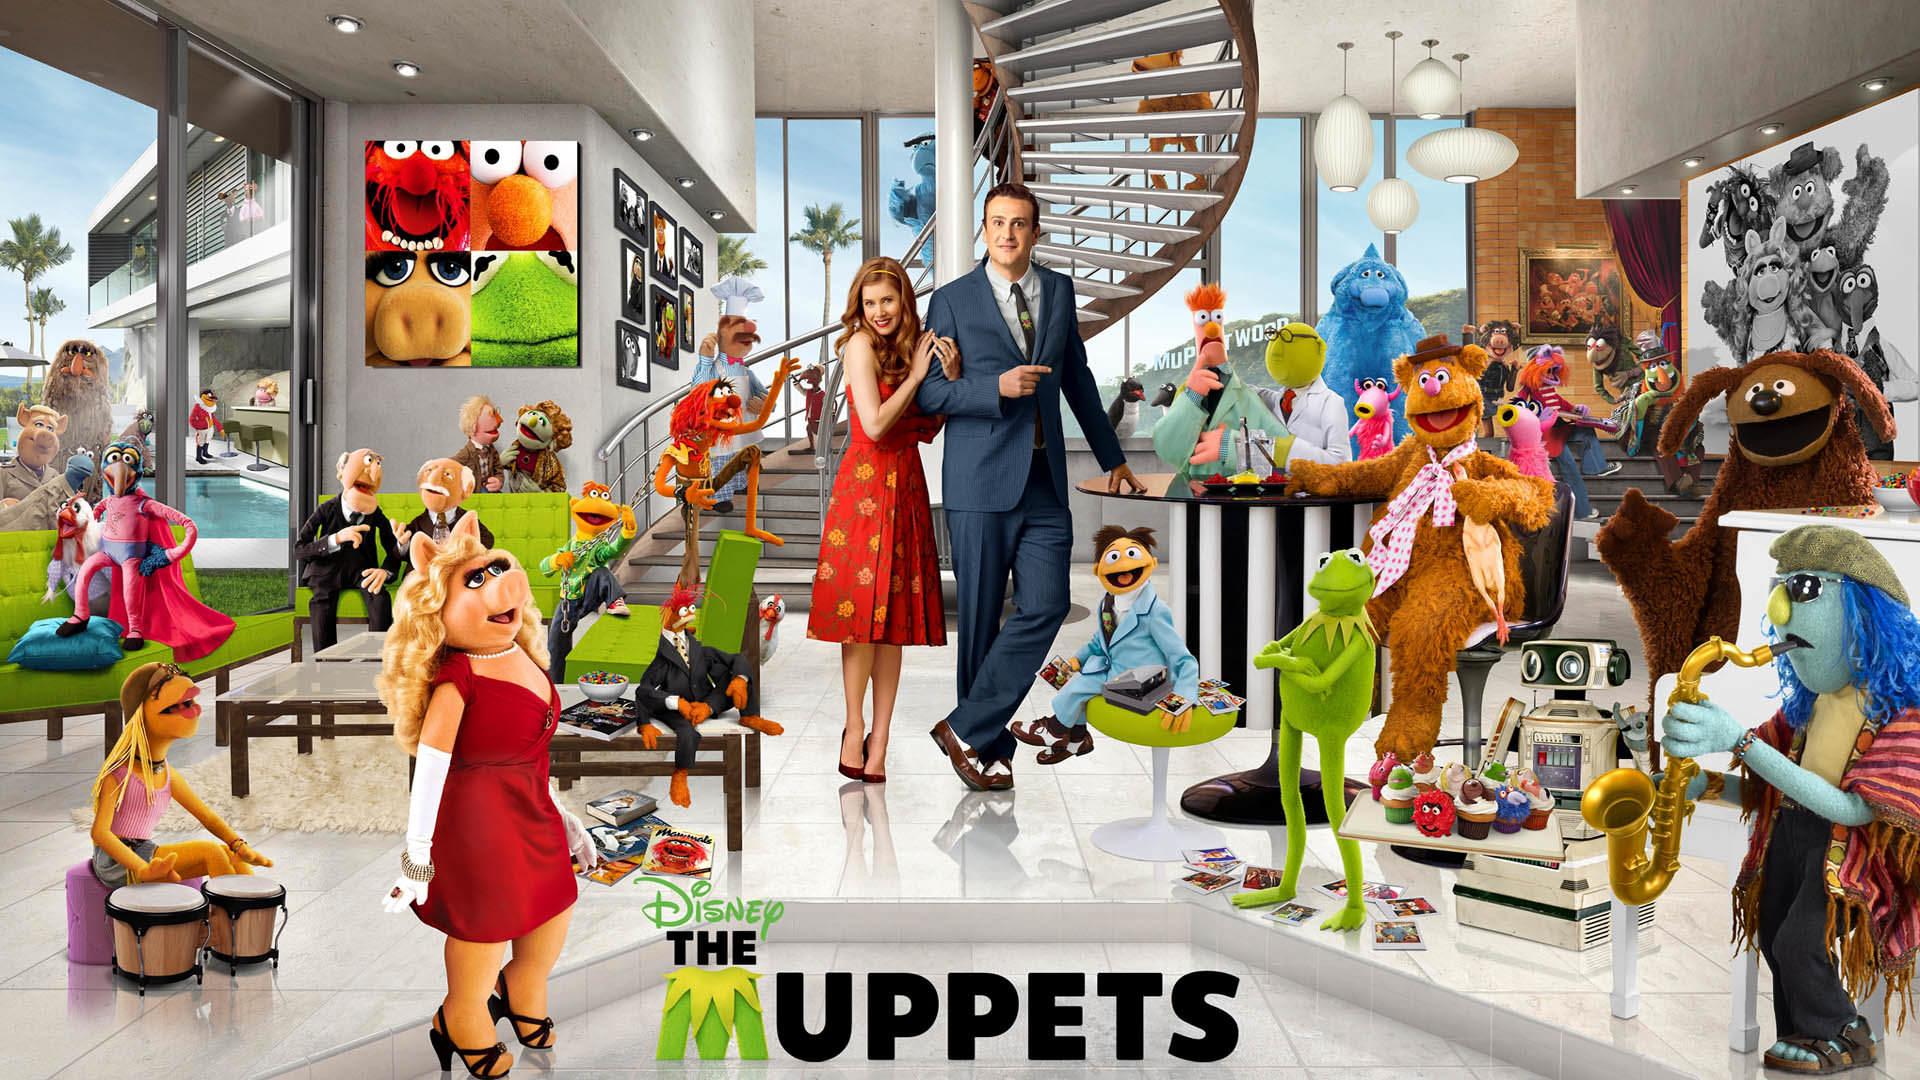 The Muppet Show wallpaper 1920x1080 Full HD (1080p) desktop background